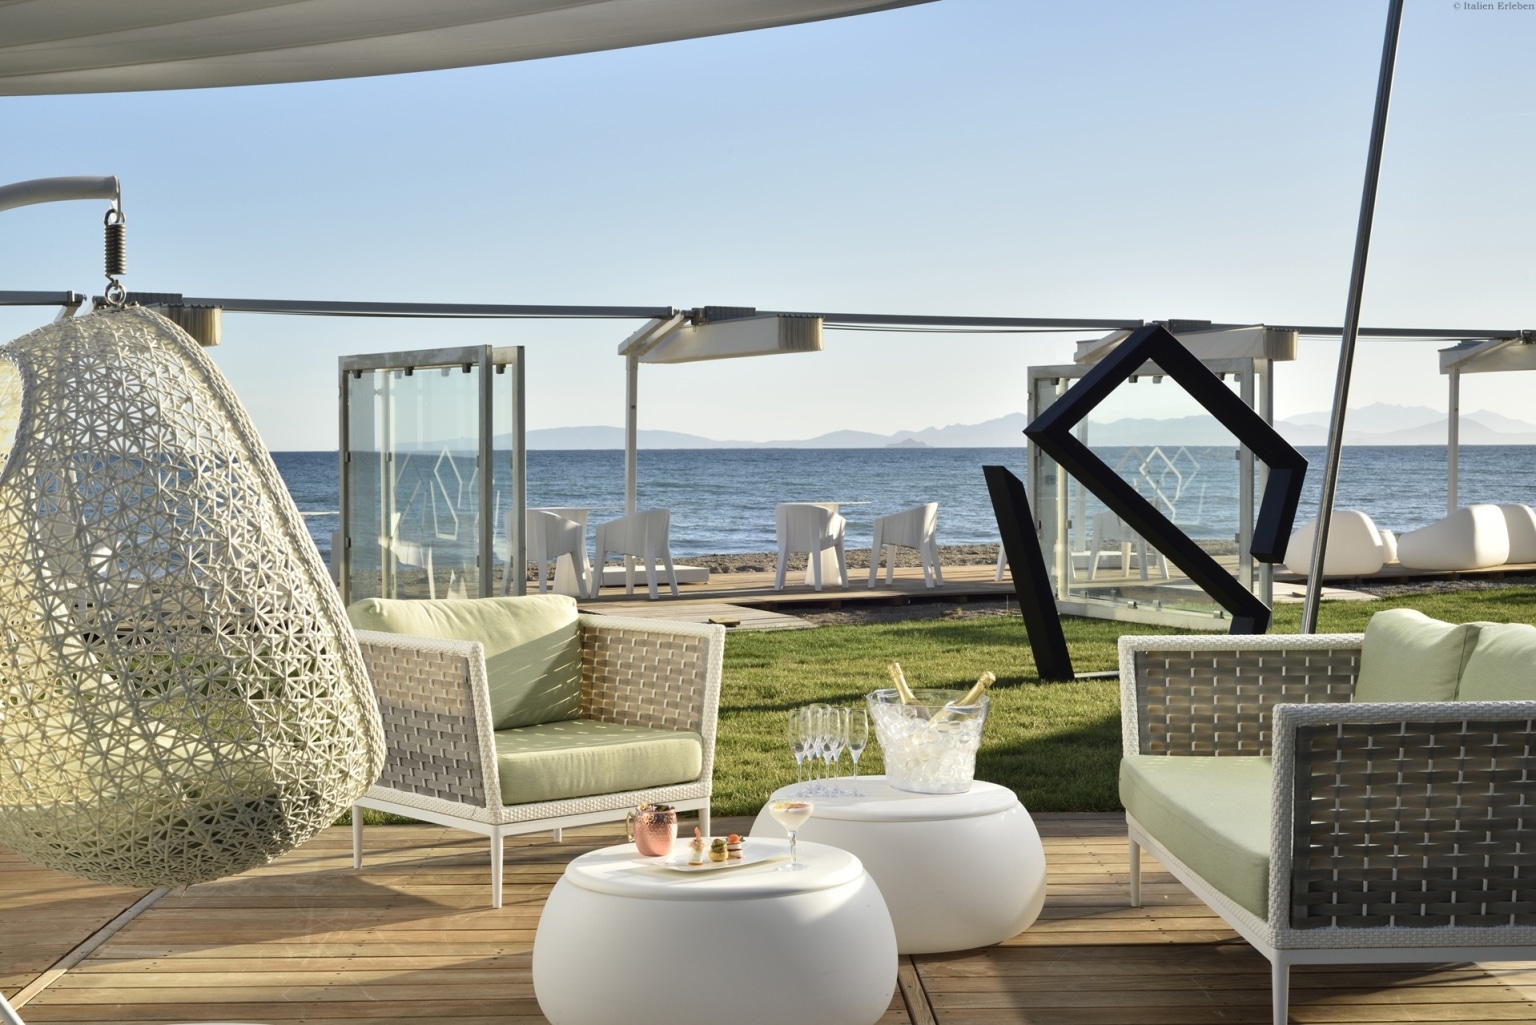 Toskana Hotel The Sense Experience Resort Follonica Maremma direkt Meer Pinien Strand Sand Pool Beach Club